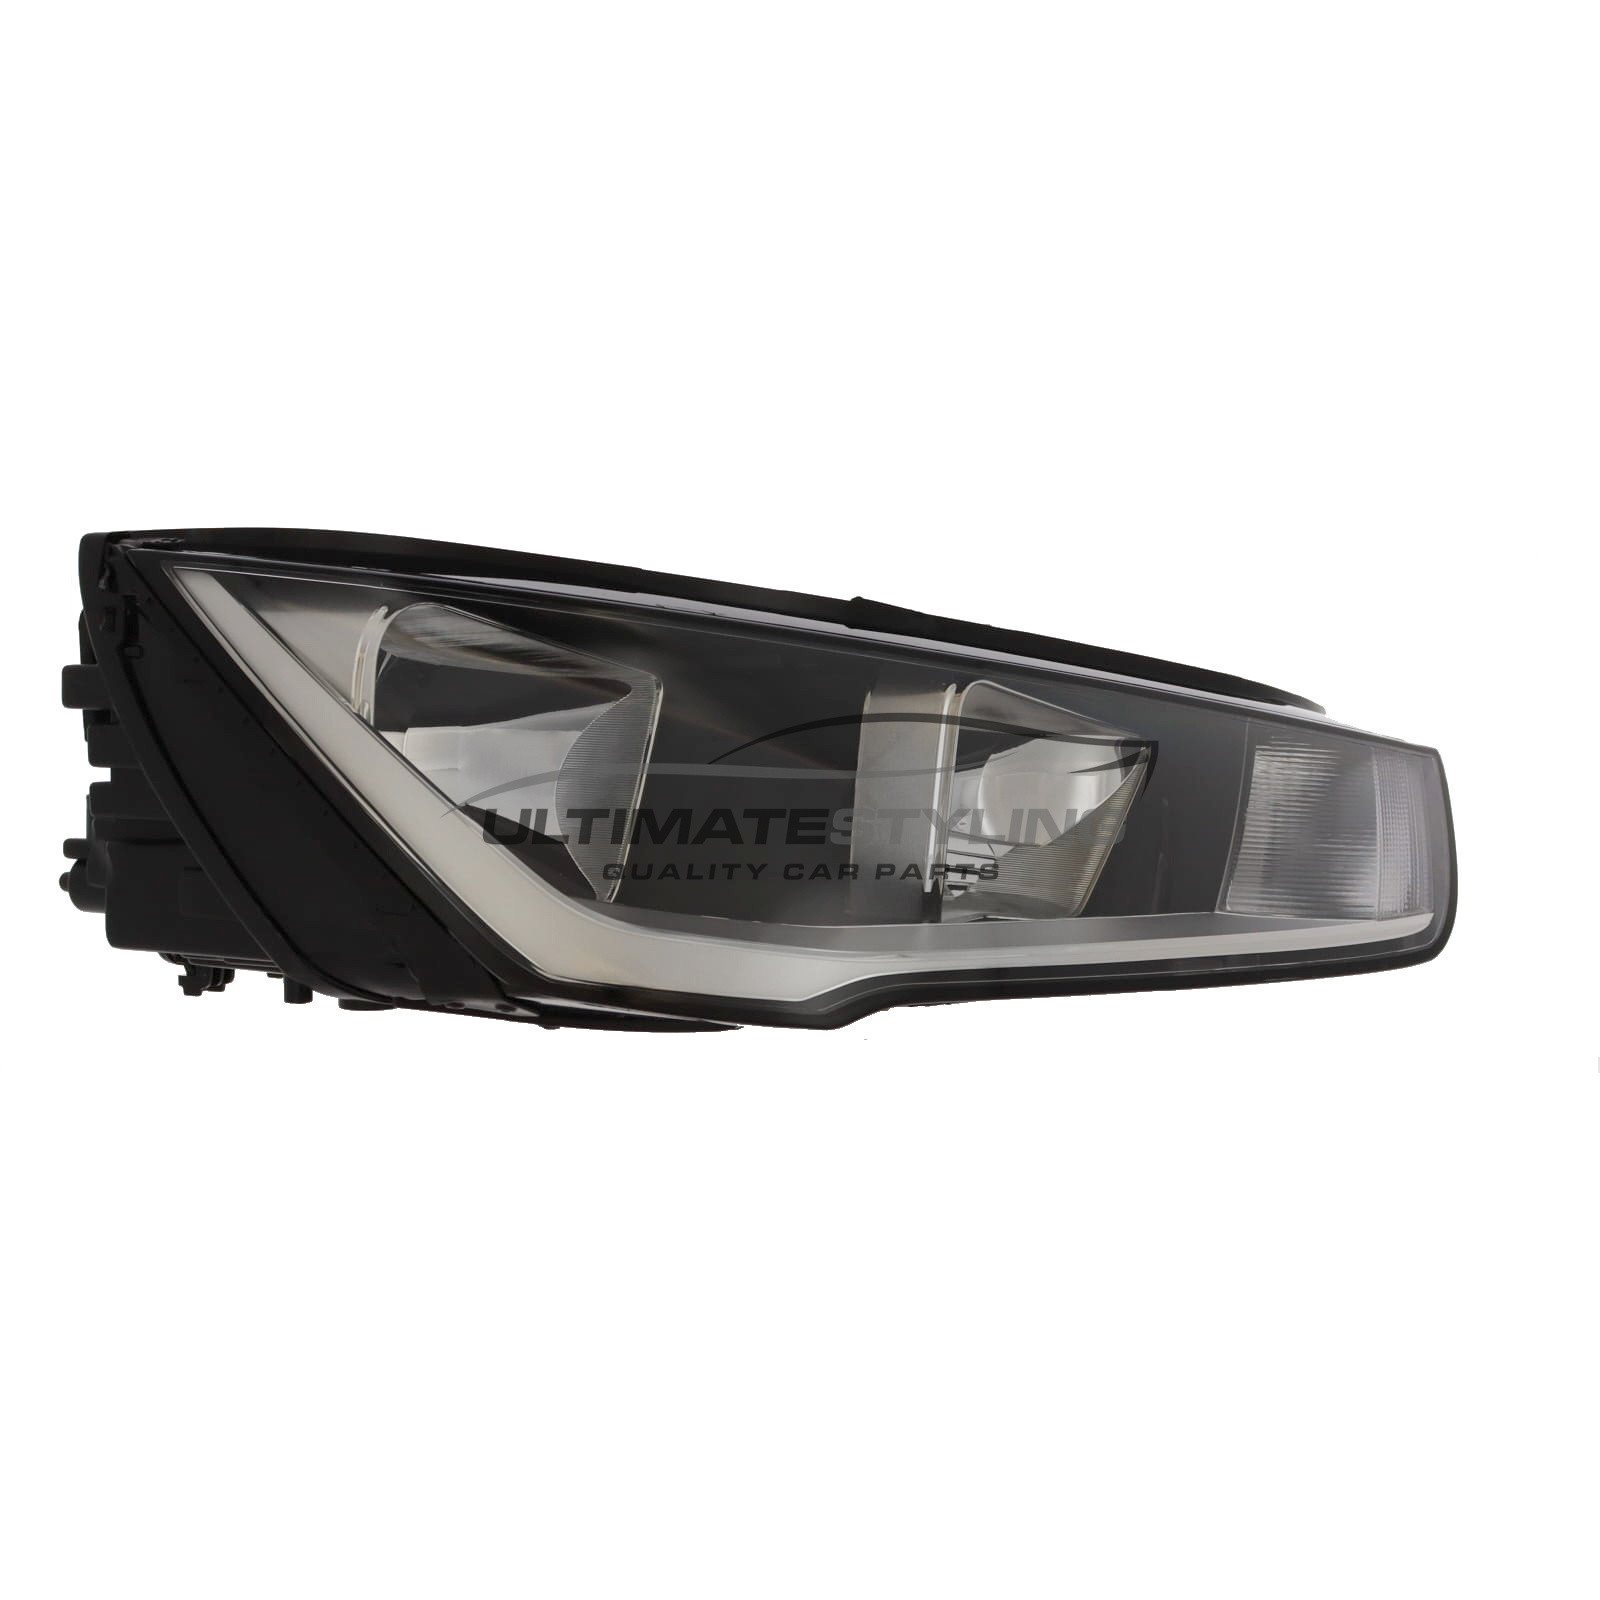 Audi A1 Headlight / Headlamp - Drivers Side (RH) - Halogen